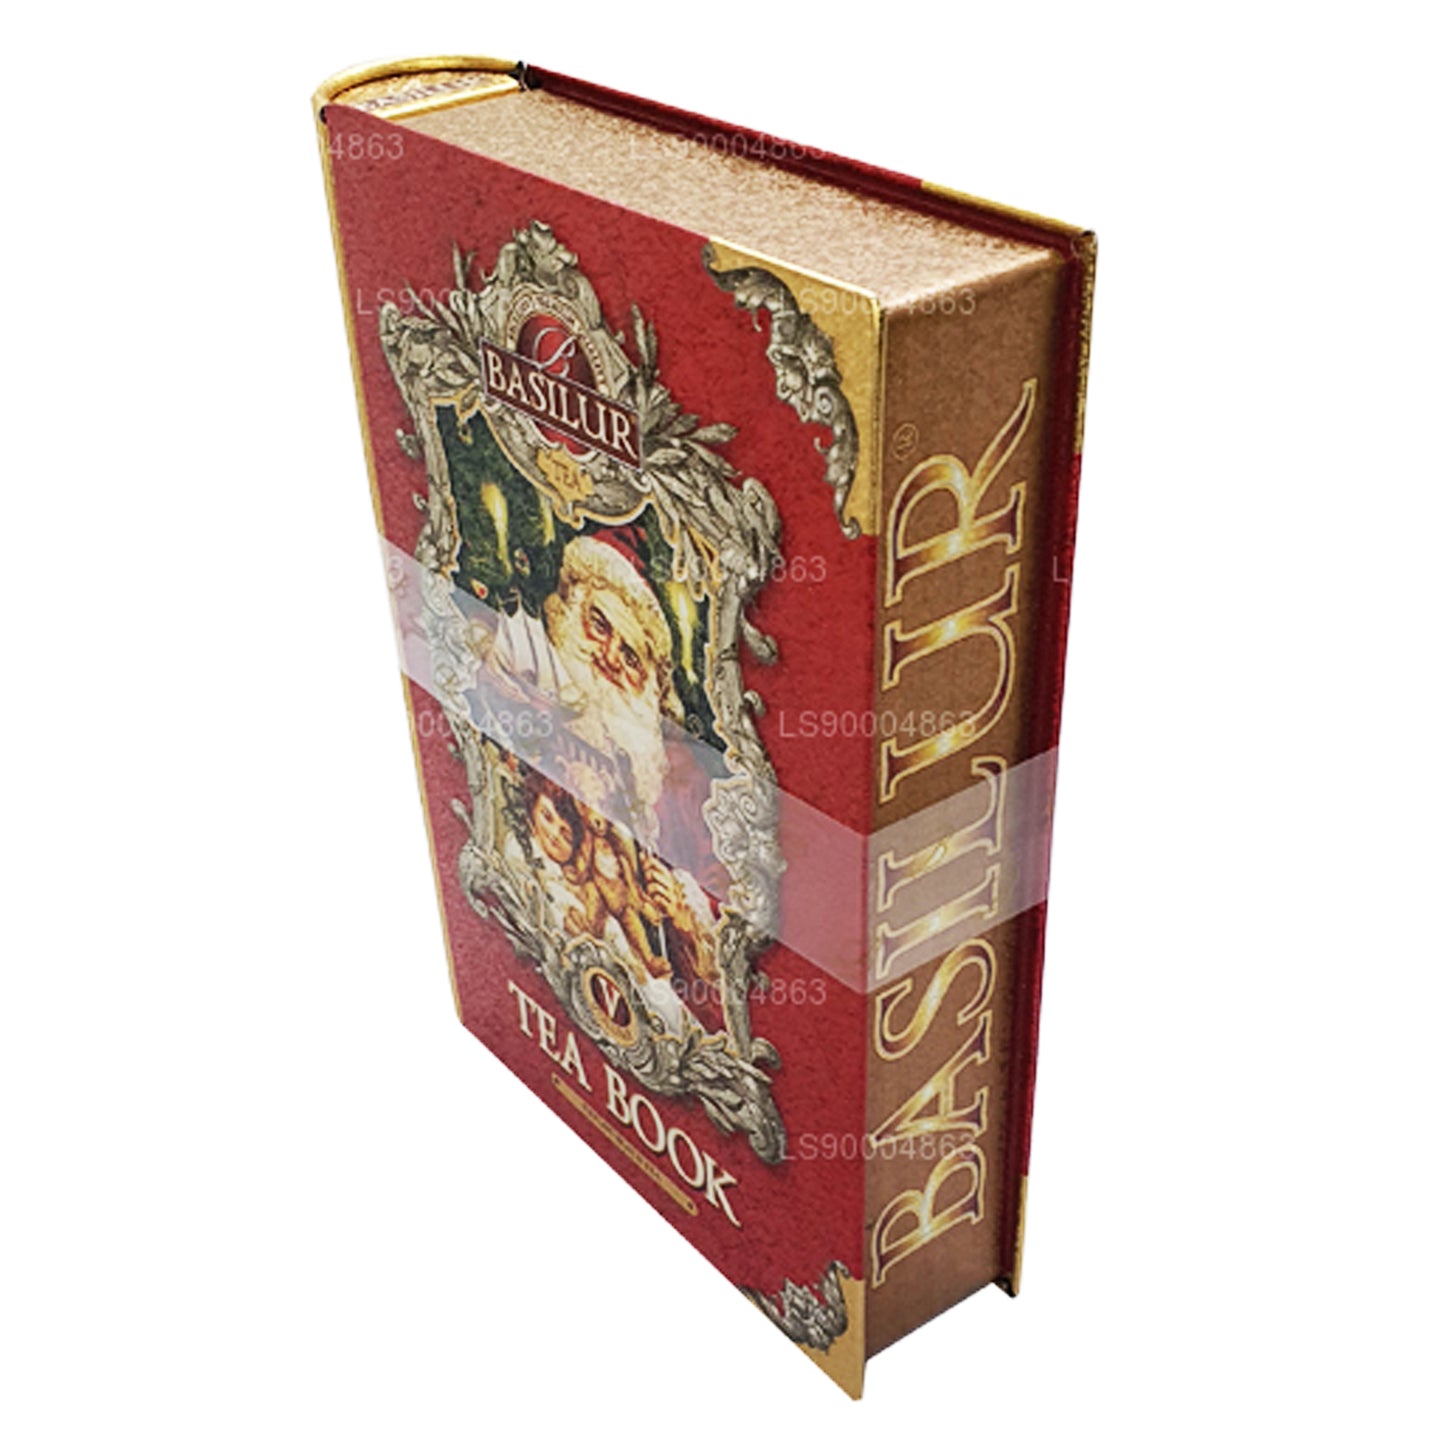 Basilur Festival "Tea Book Volume V - Red" (100g) Caddy